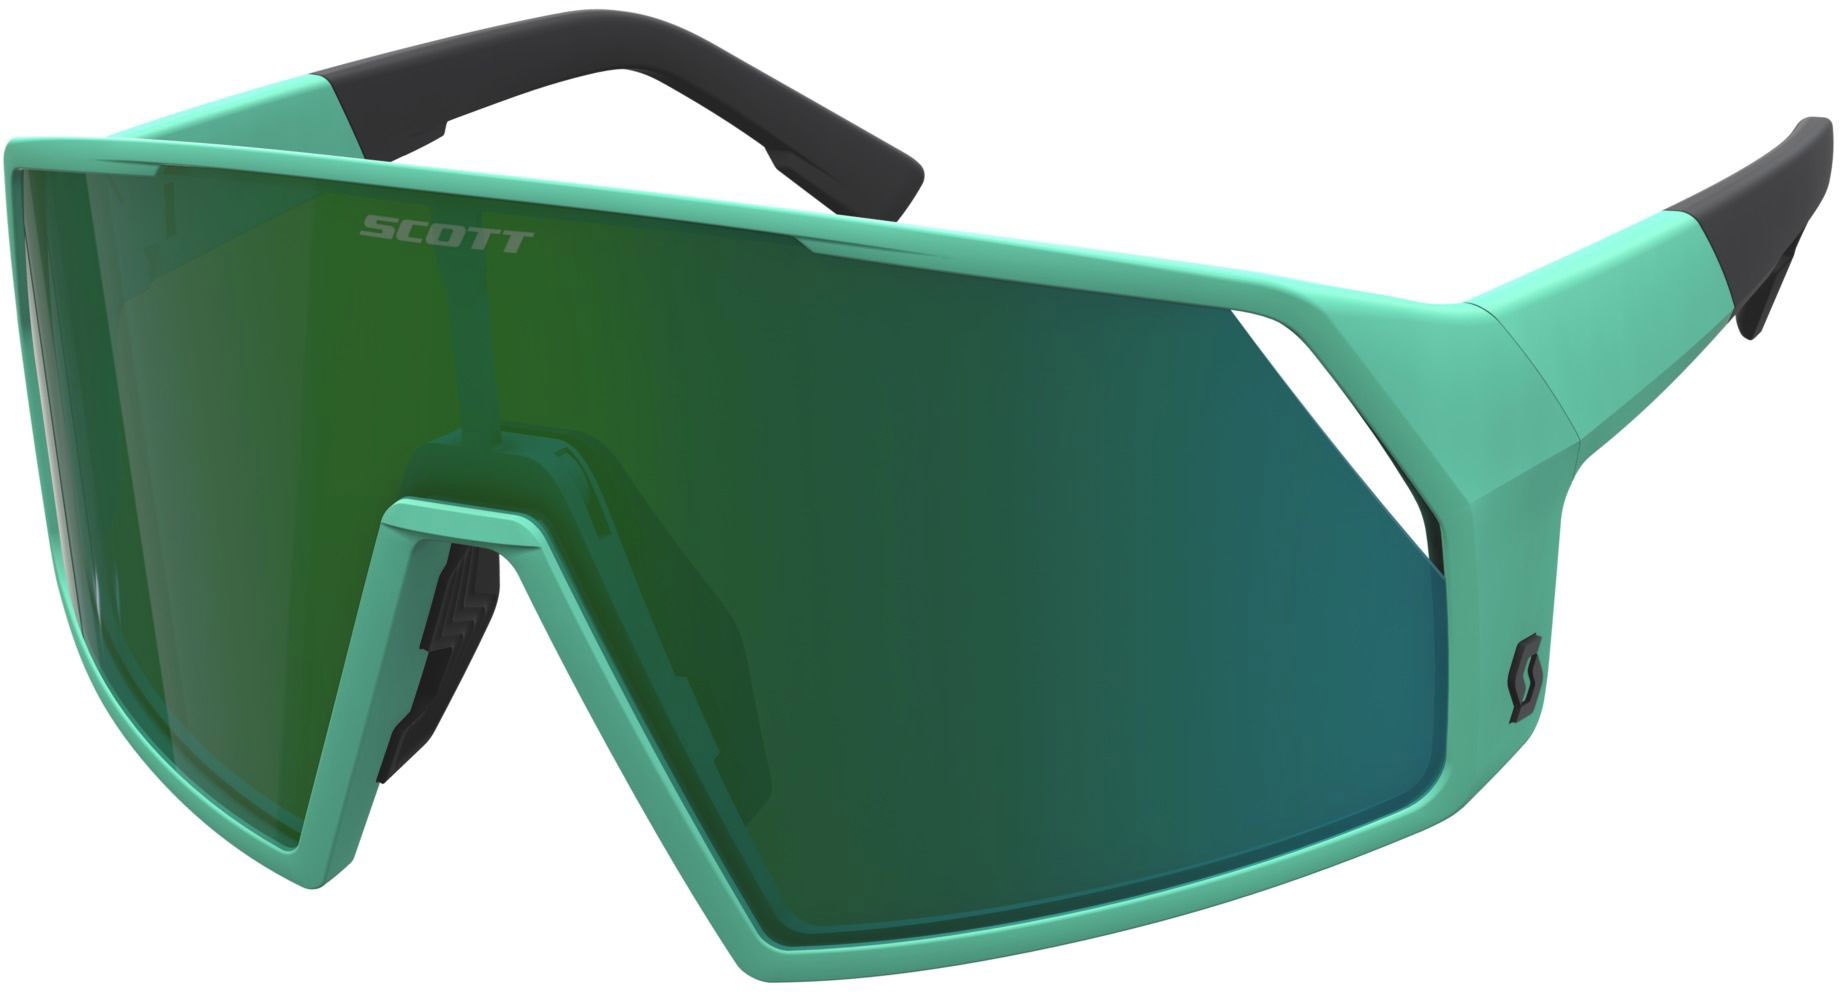 Se Scott Pro Shield Cykelbrille - Soft Teal Green / Green Chrome hos Cykelexperten.dk